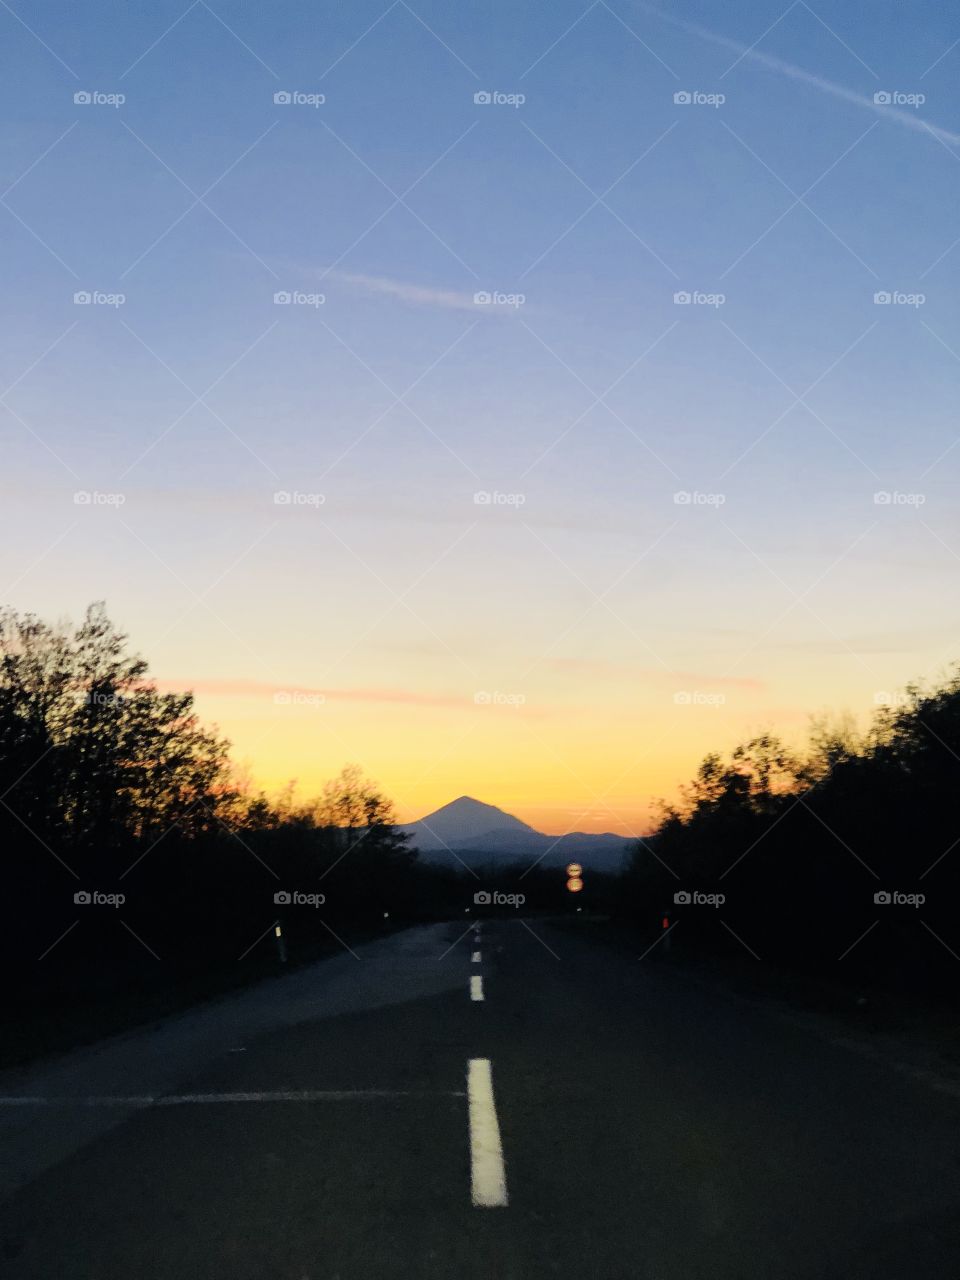 Pyramid mountain, fire sky, road